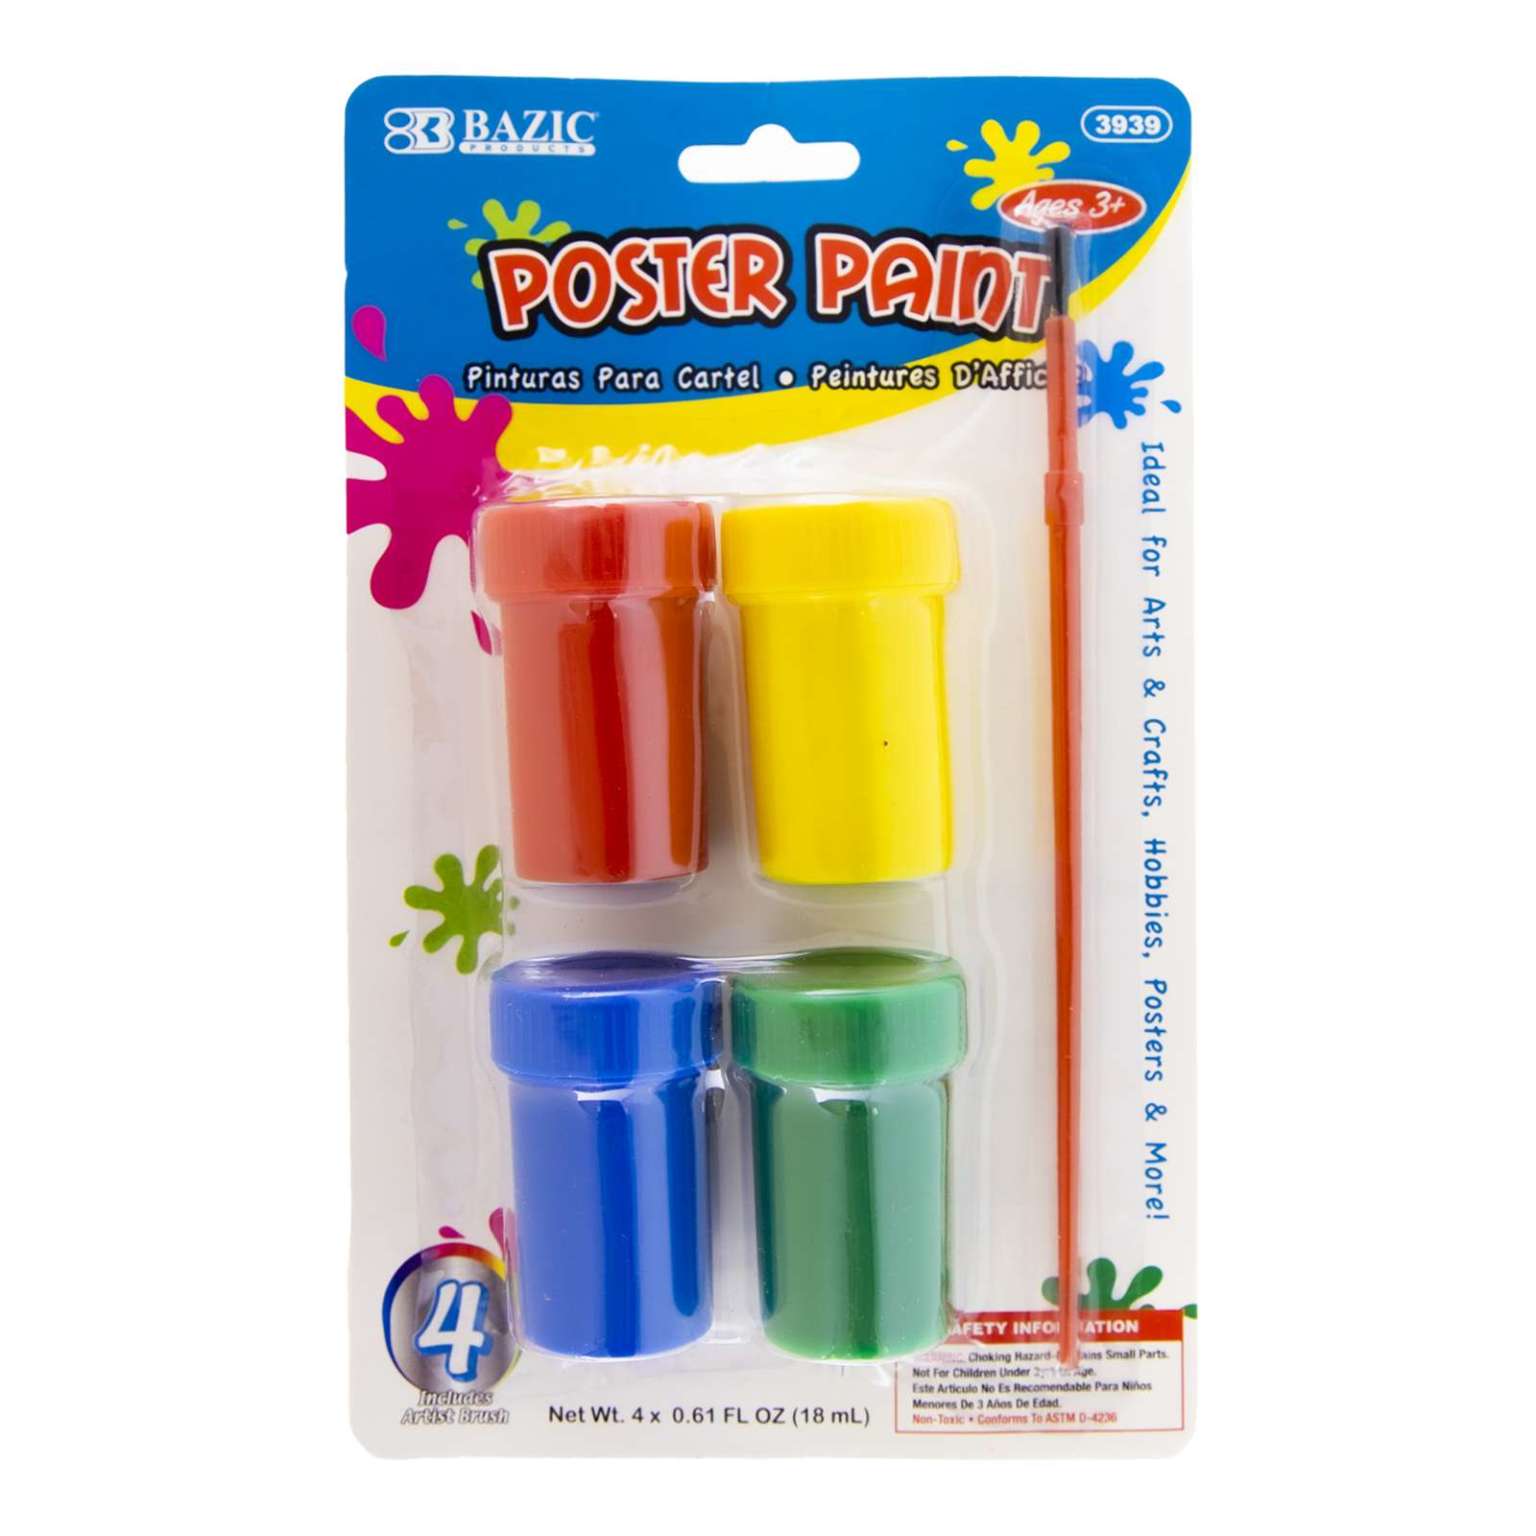 Wholesale Pastel Brush Markers - 6 Pack, Assorted - DollarDays